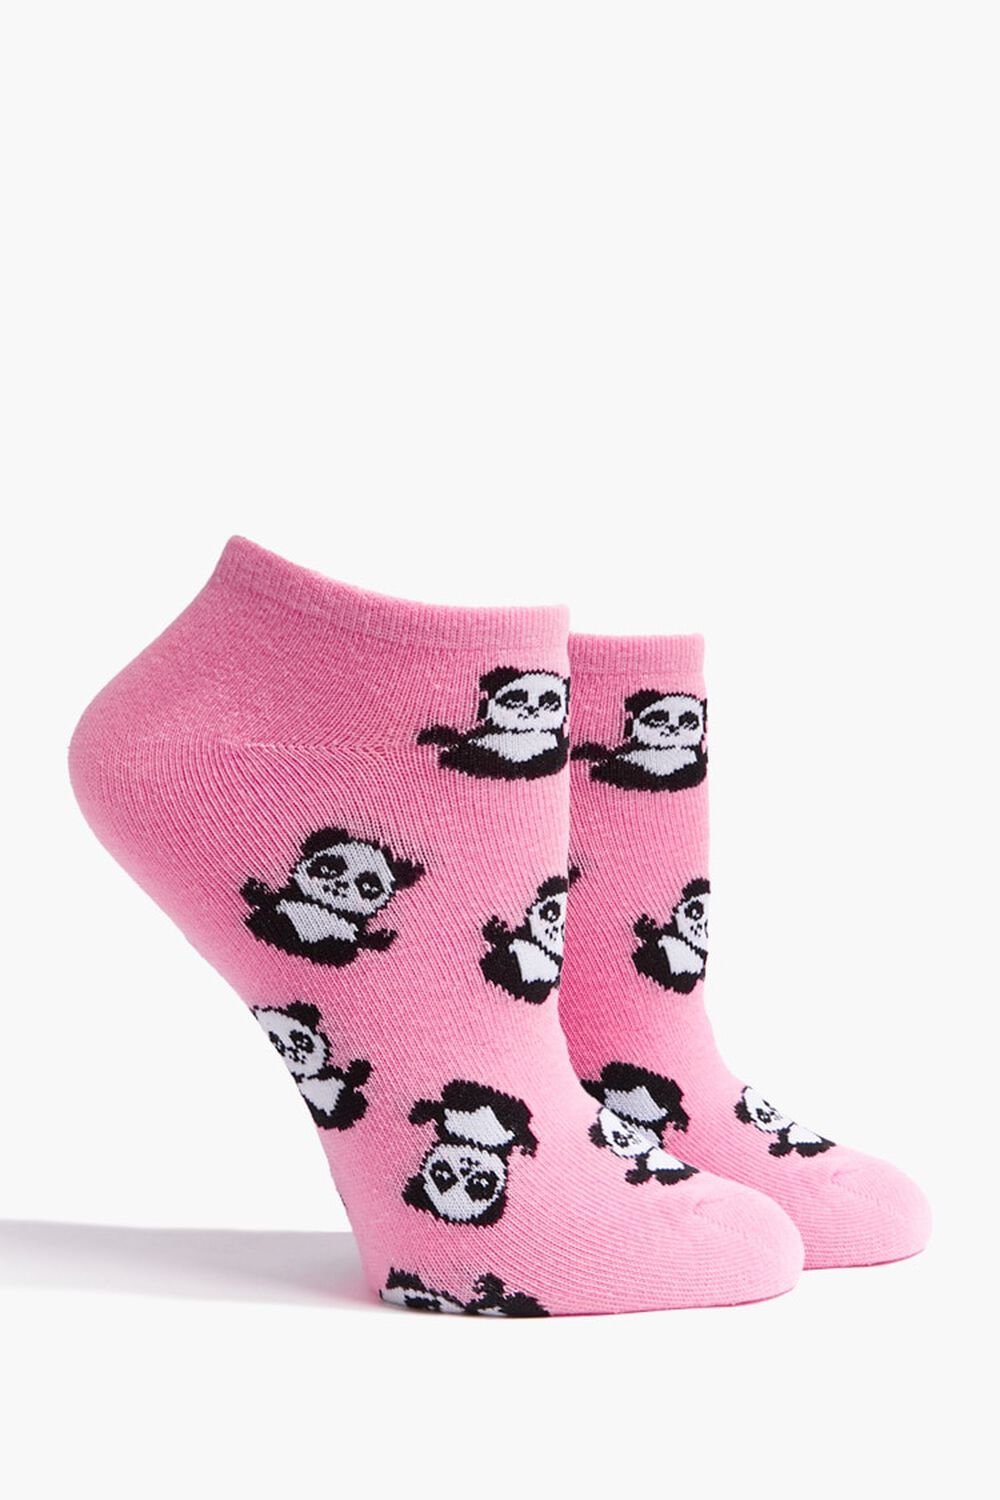 PINK/MULTI Panda Print Ankle Socks, image 1